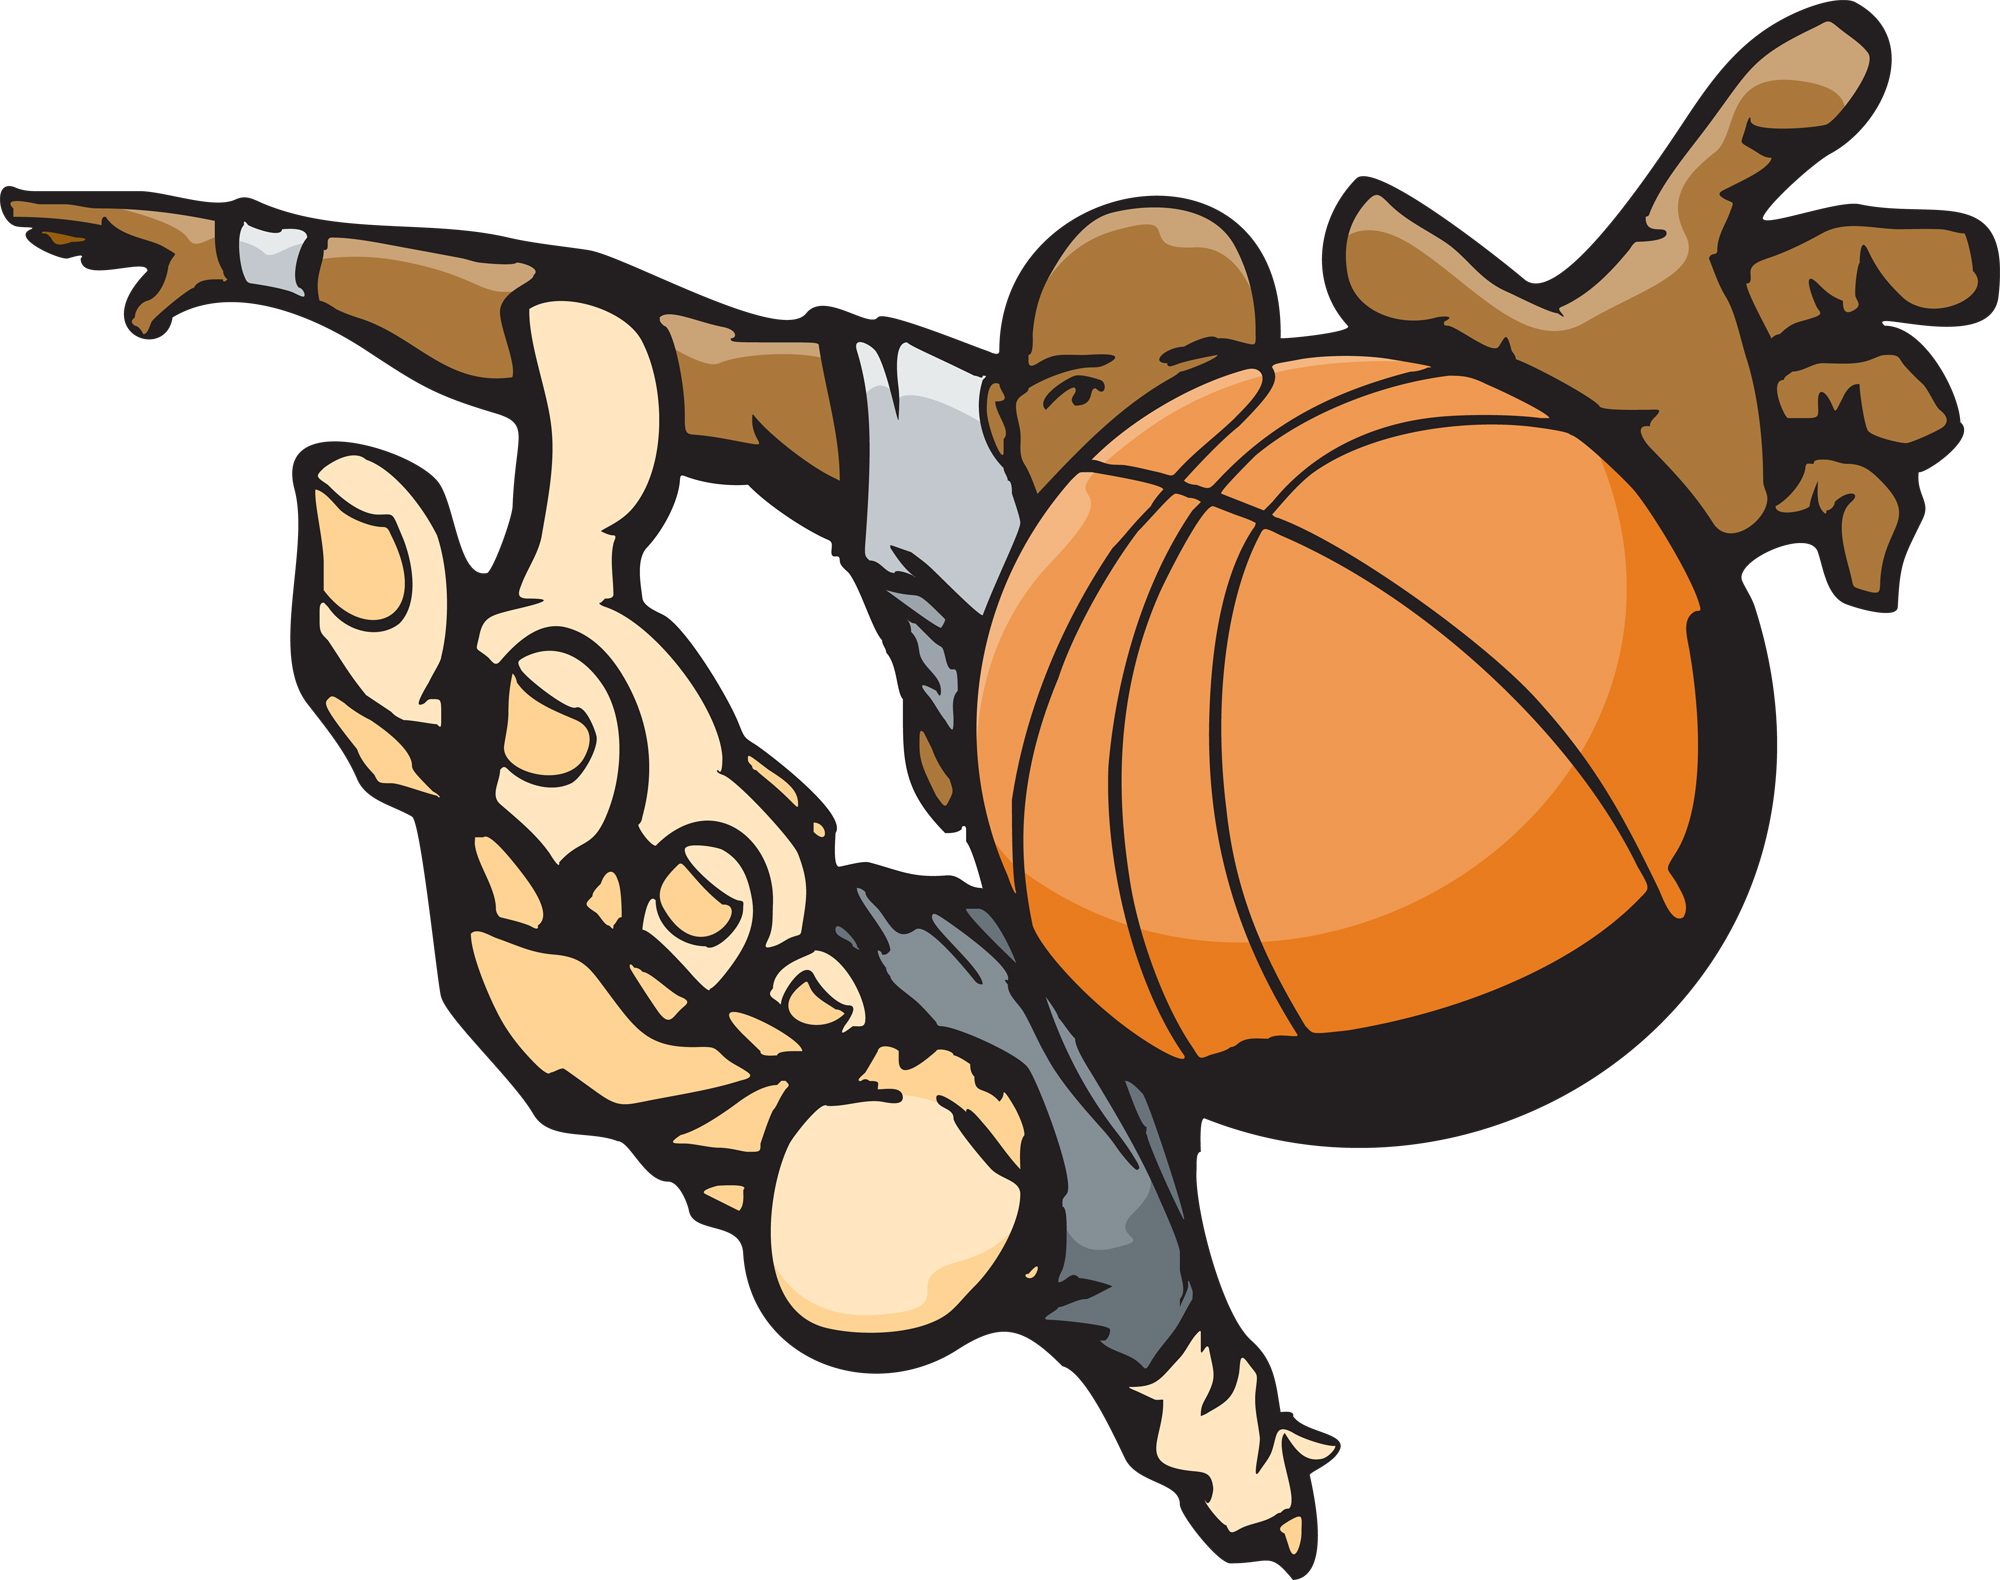 Basketball clipart image image 